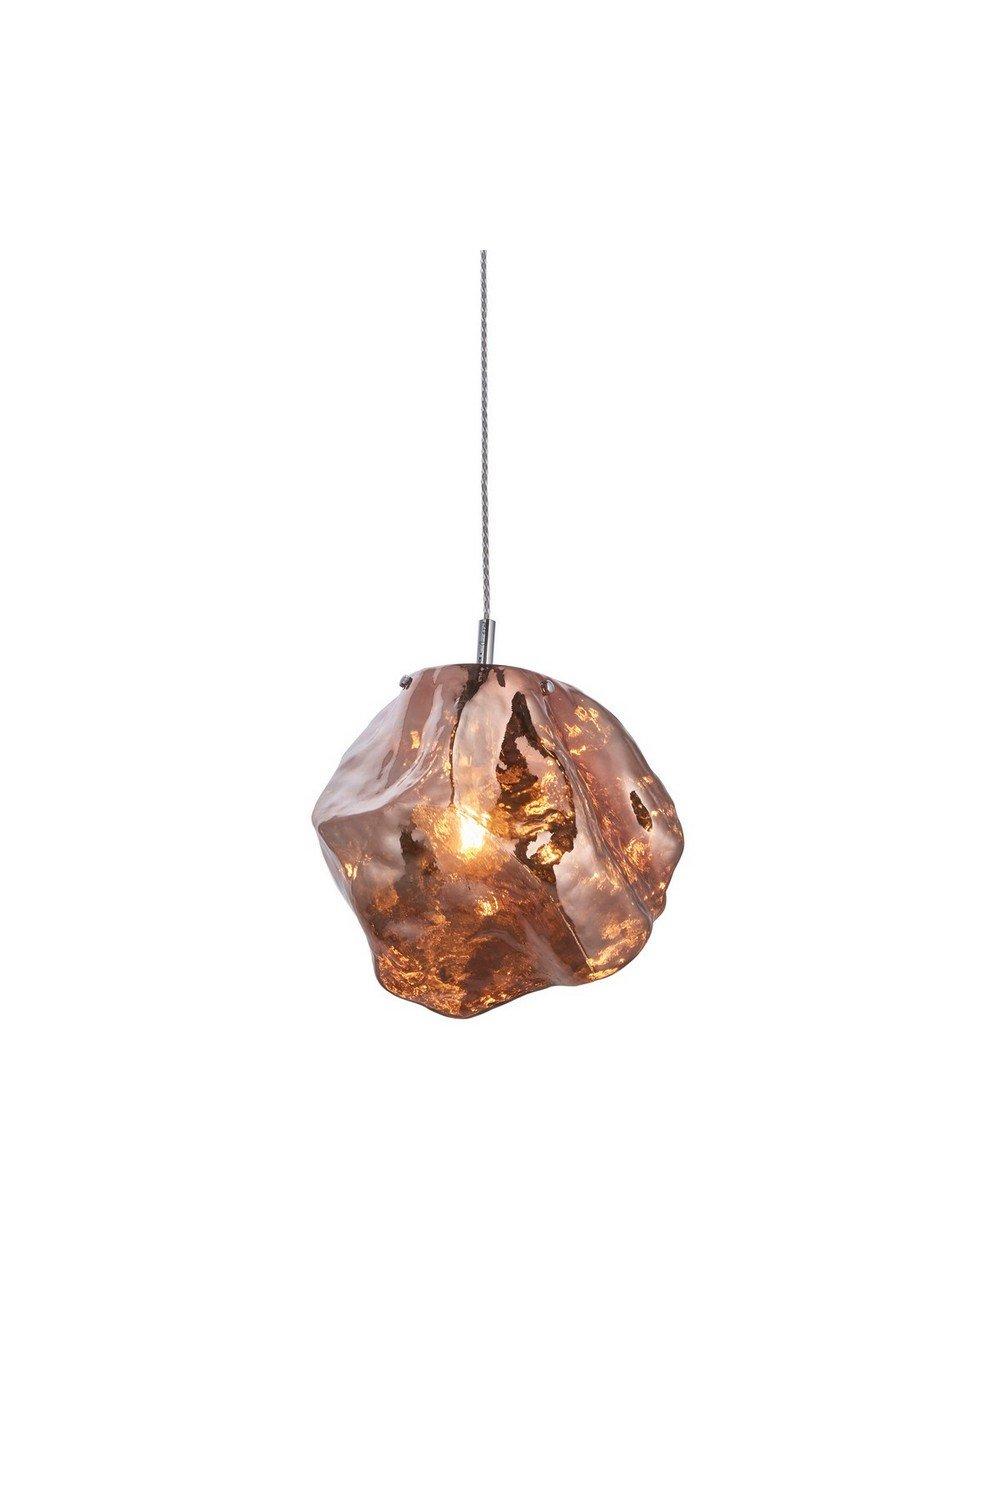 Rock Modern Contemporary Single Pendant Light Metallic Copper Glass Shade Chrome Plated